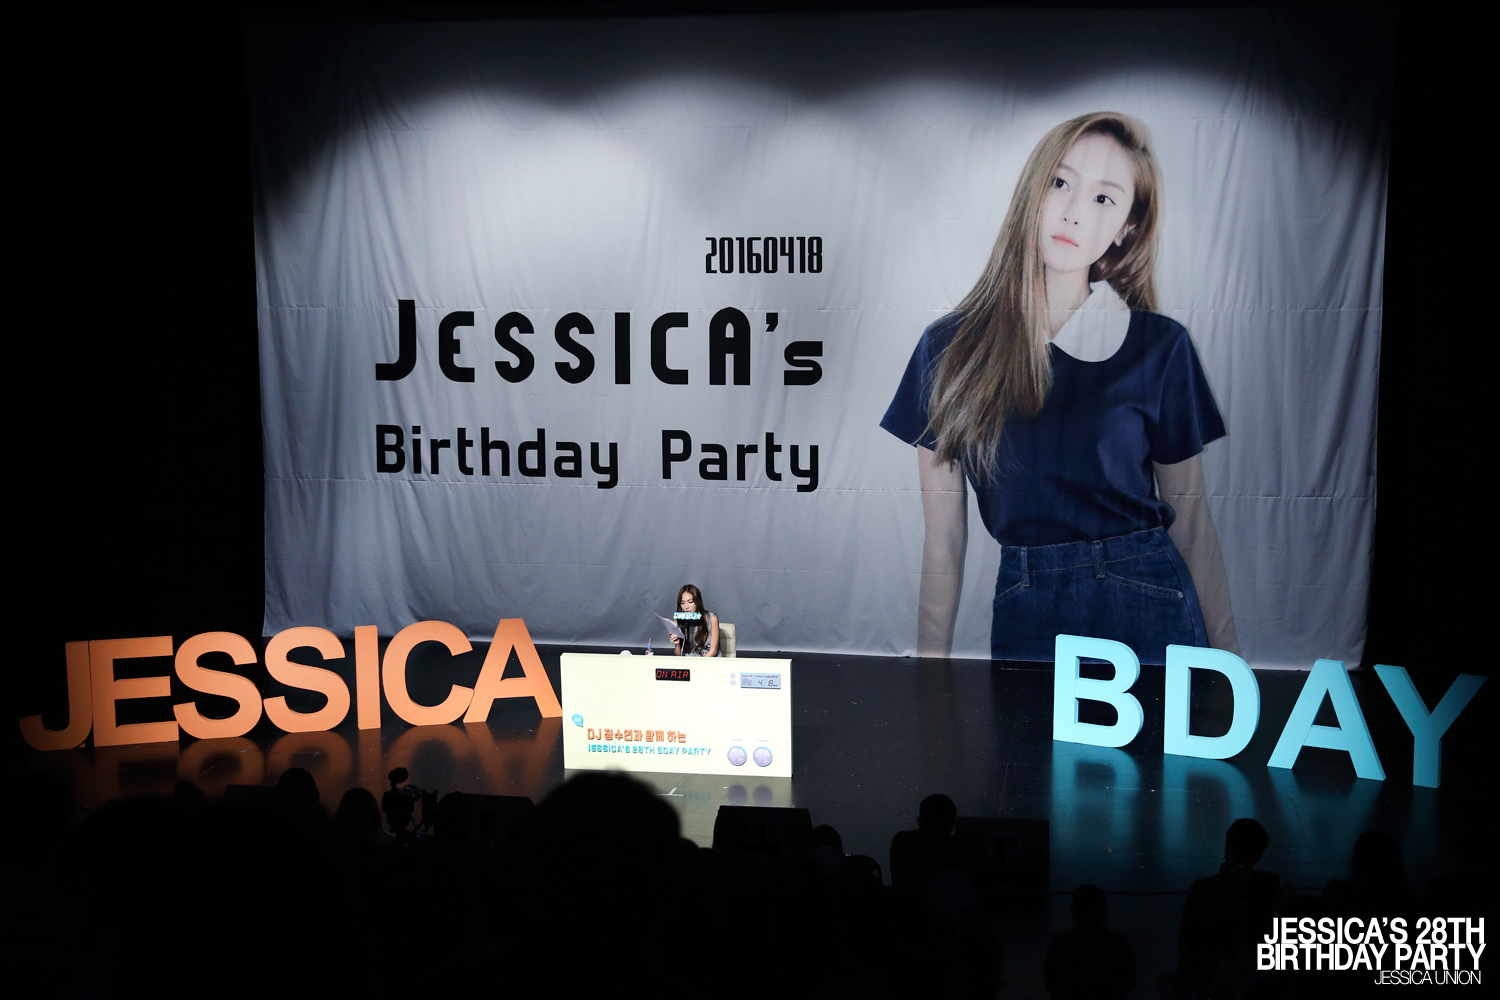 [PIC][17-04-2016]Jessica tham dự "JESSICA'S 28TH BIRTHDAY PARTY" vào tối nay 25986896984_5ef4b56508_o